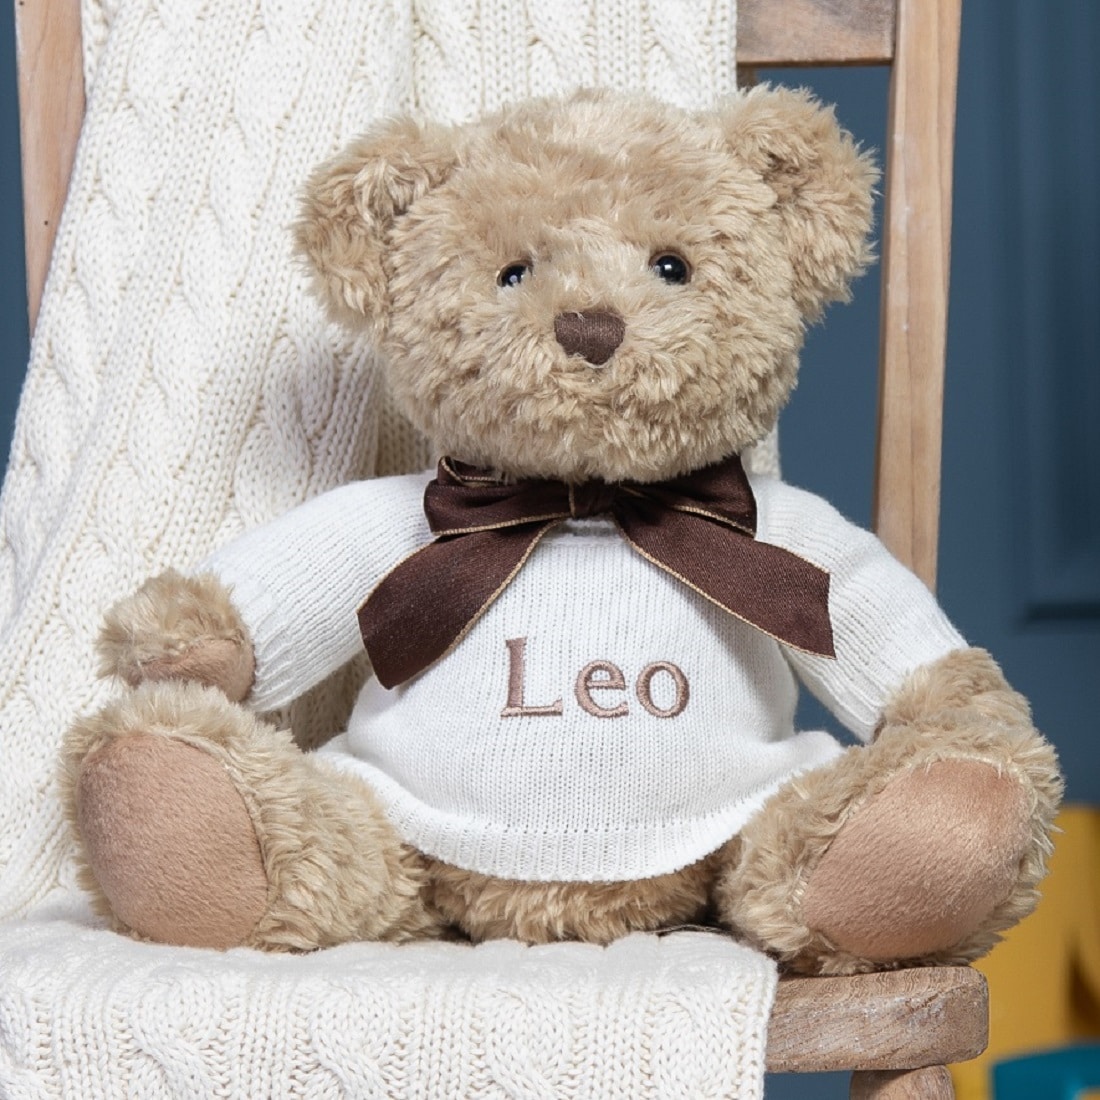 Personalised Keel sherwood large teddy bear soft toy